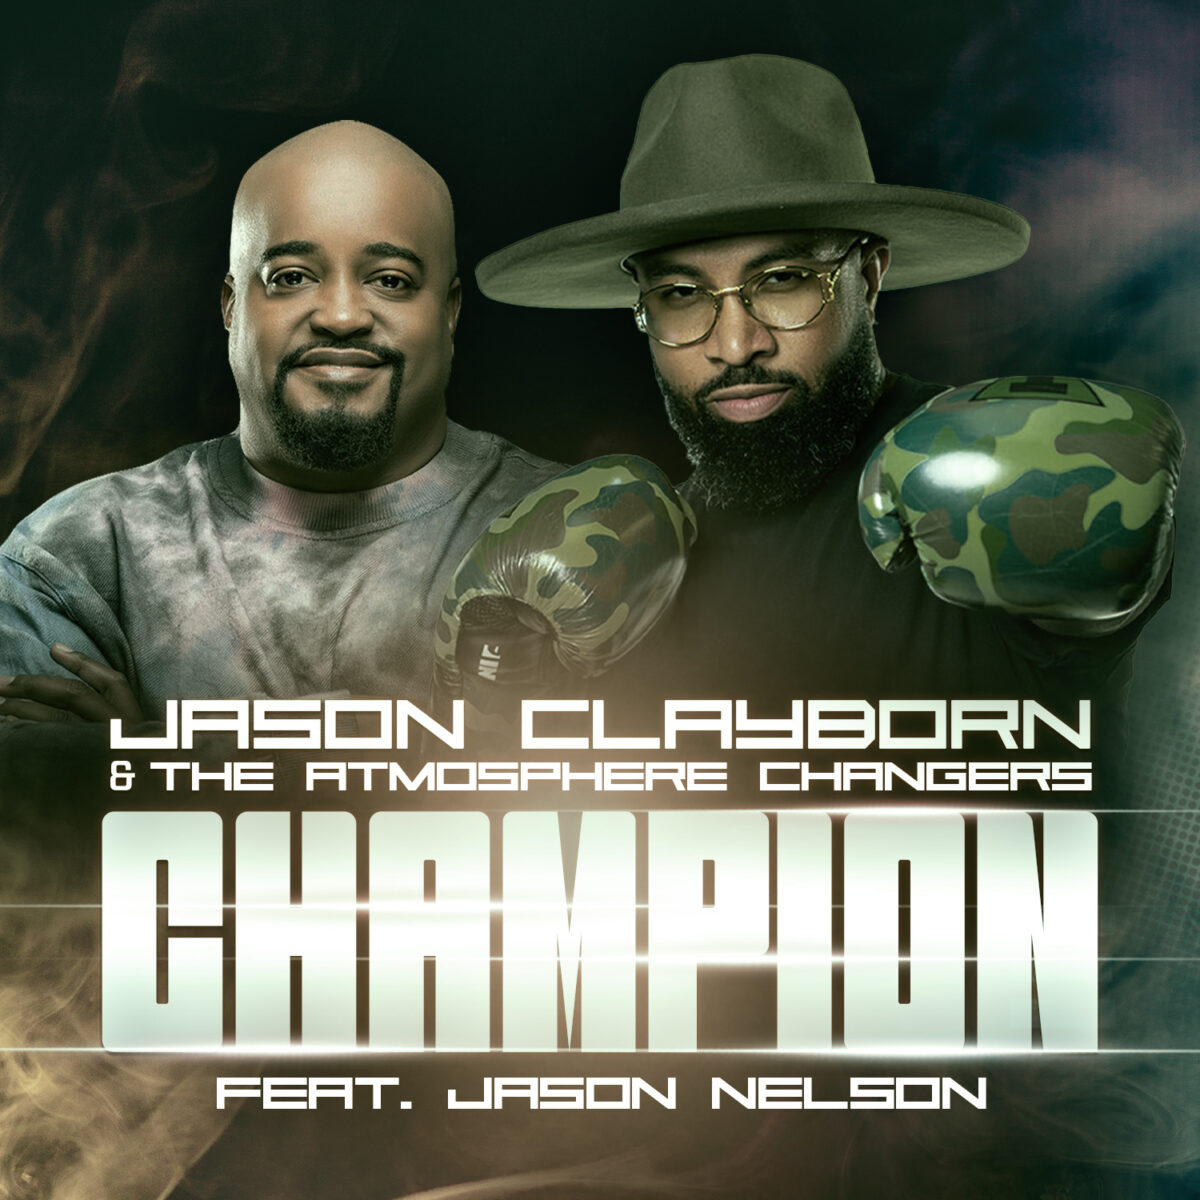 jason-clayborn-teams-up-with-jason-nelson-on-“champion”